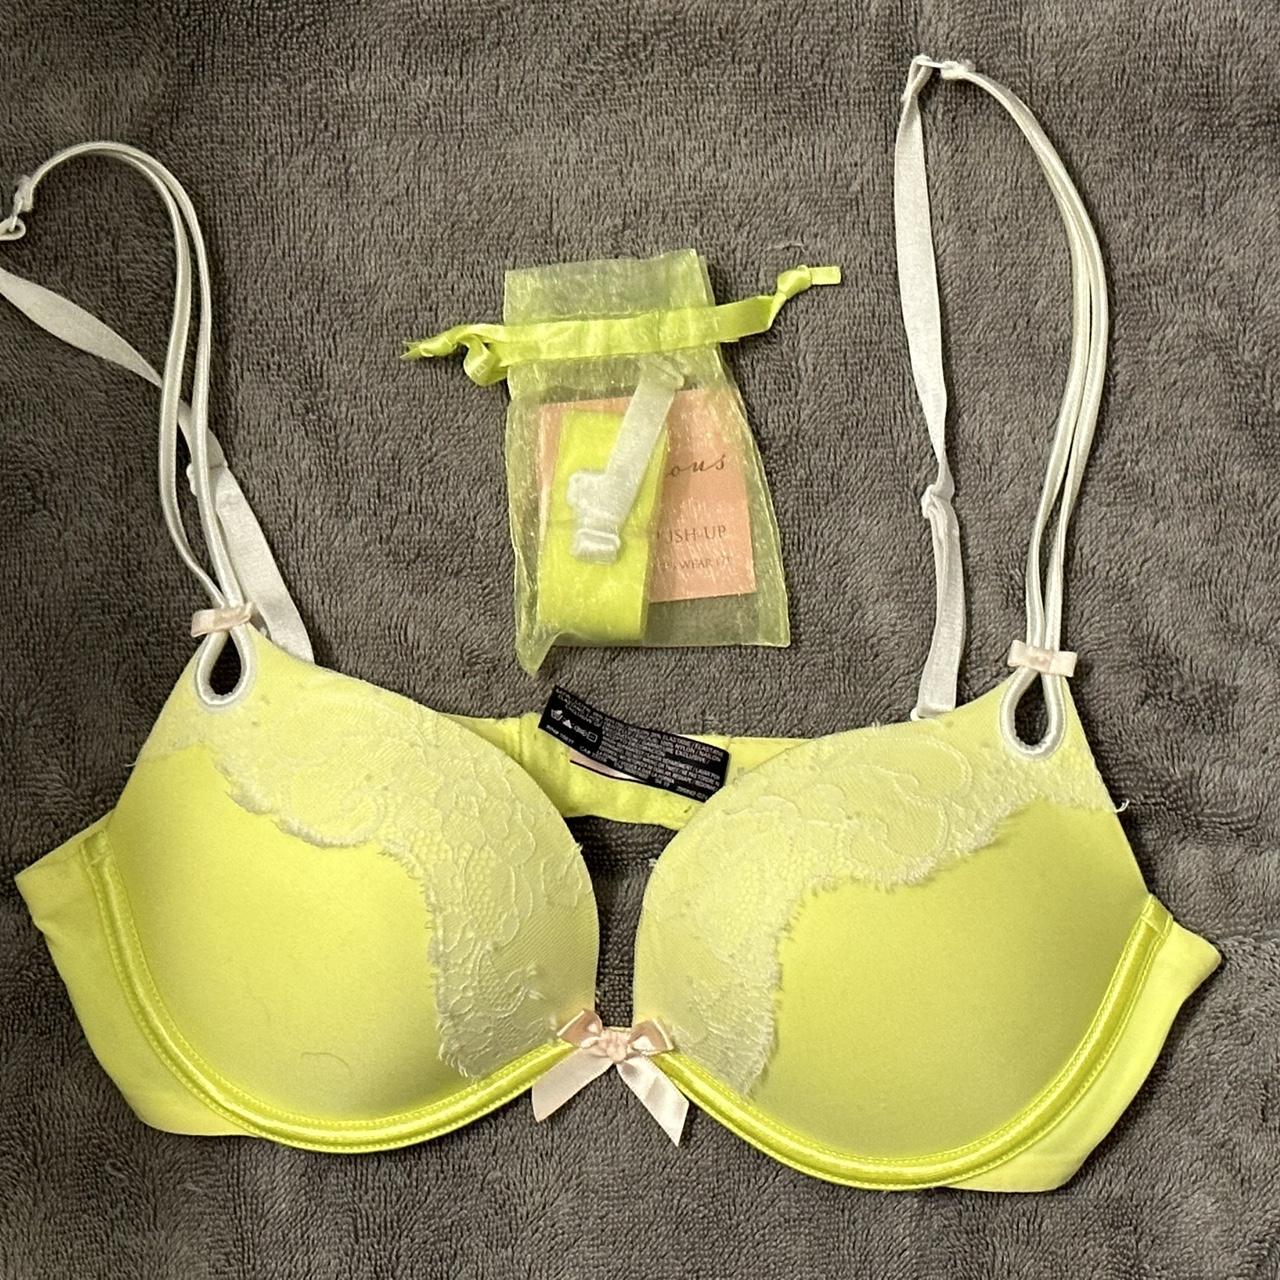 Push up bra 34B Victoria's Secret Extra straps New - Depop